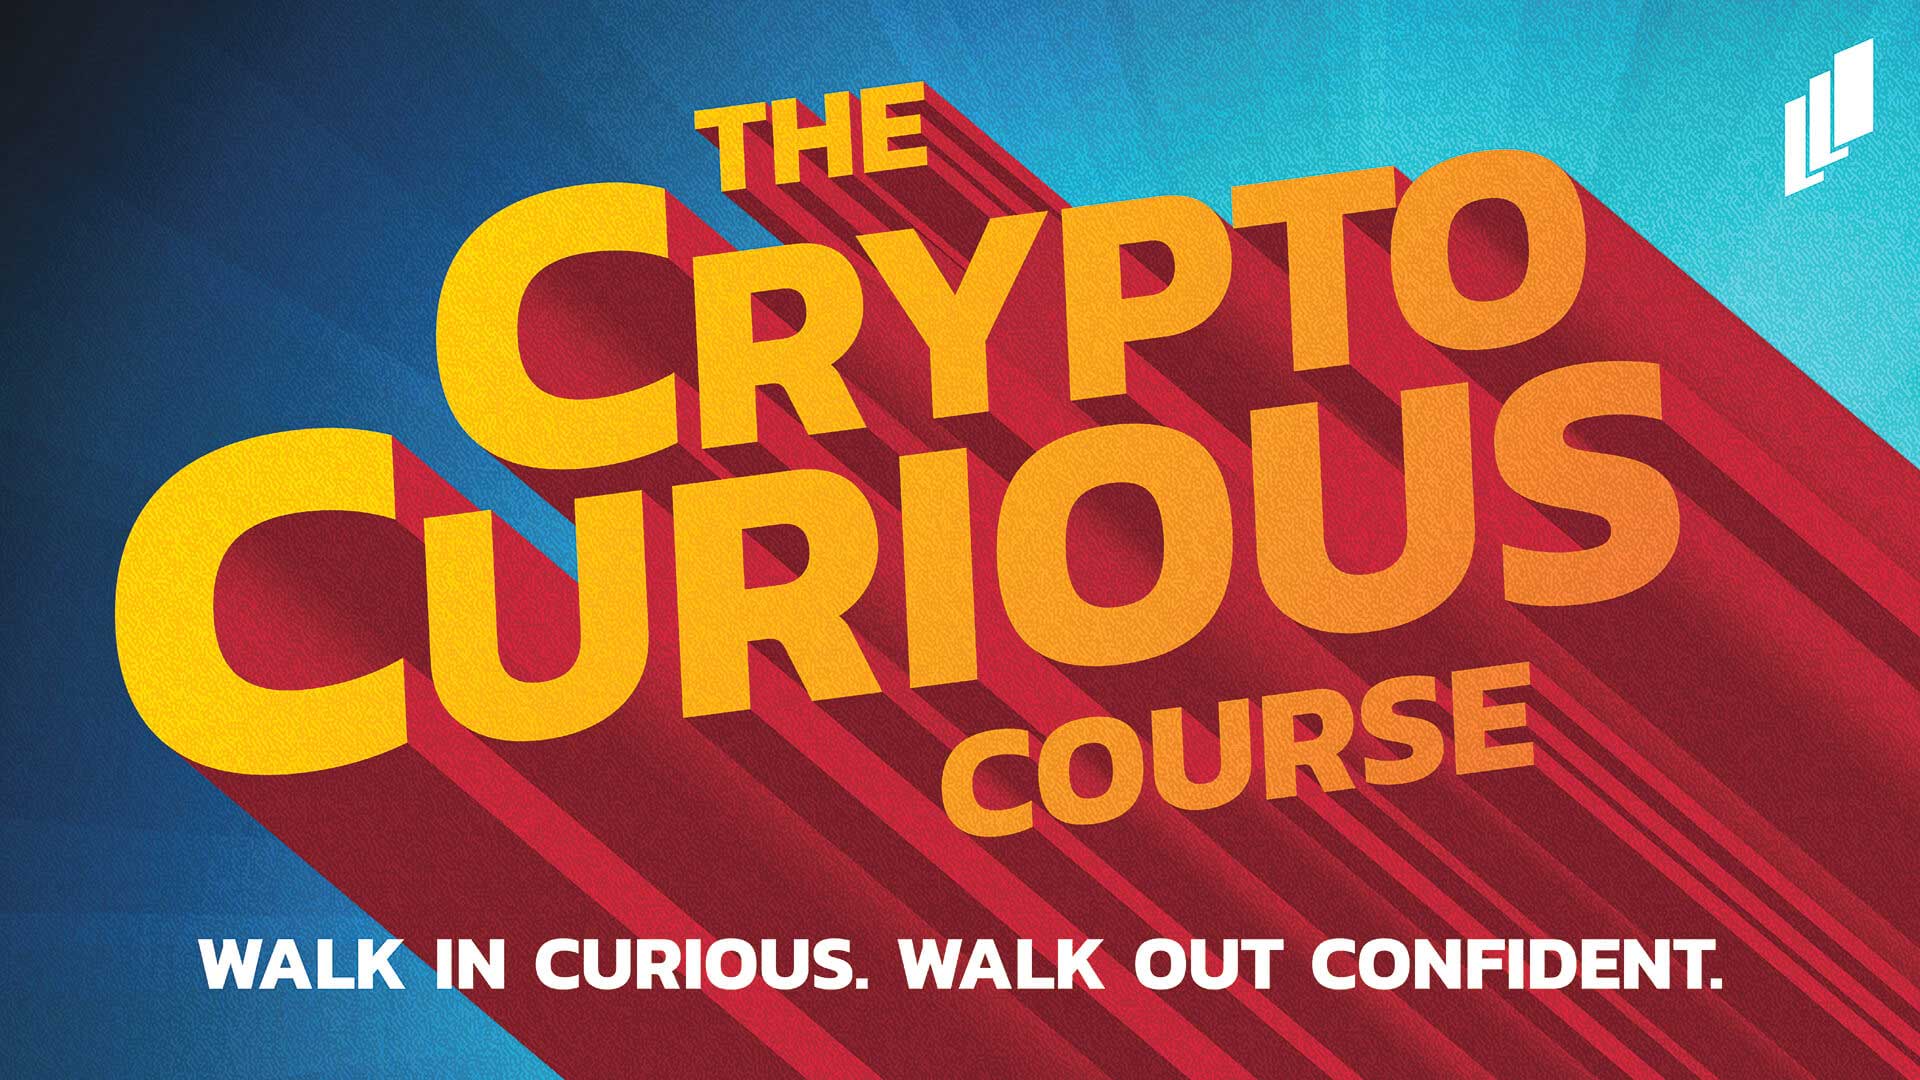 Announcing The Crypto Curious Course!